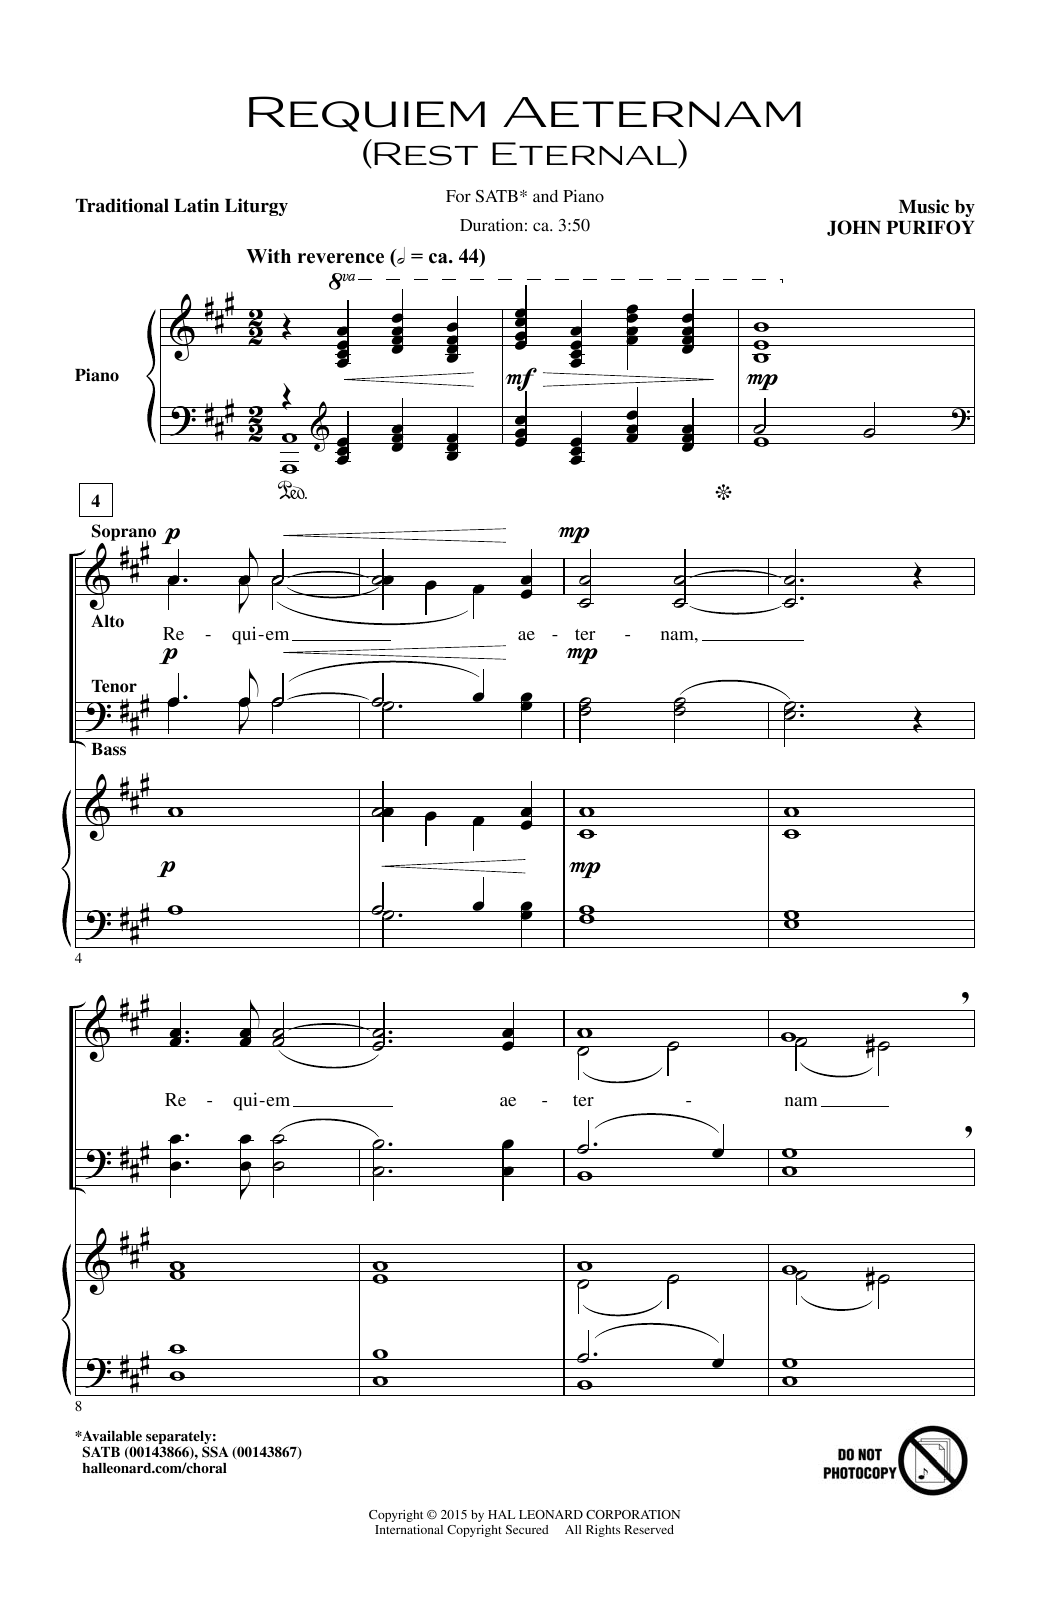 John Purifoy Requiem Aeternam (Rest Eternal) Sheet Music Notes & Chords for SATB - Download or Print PDF